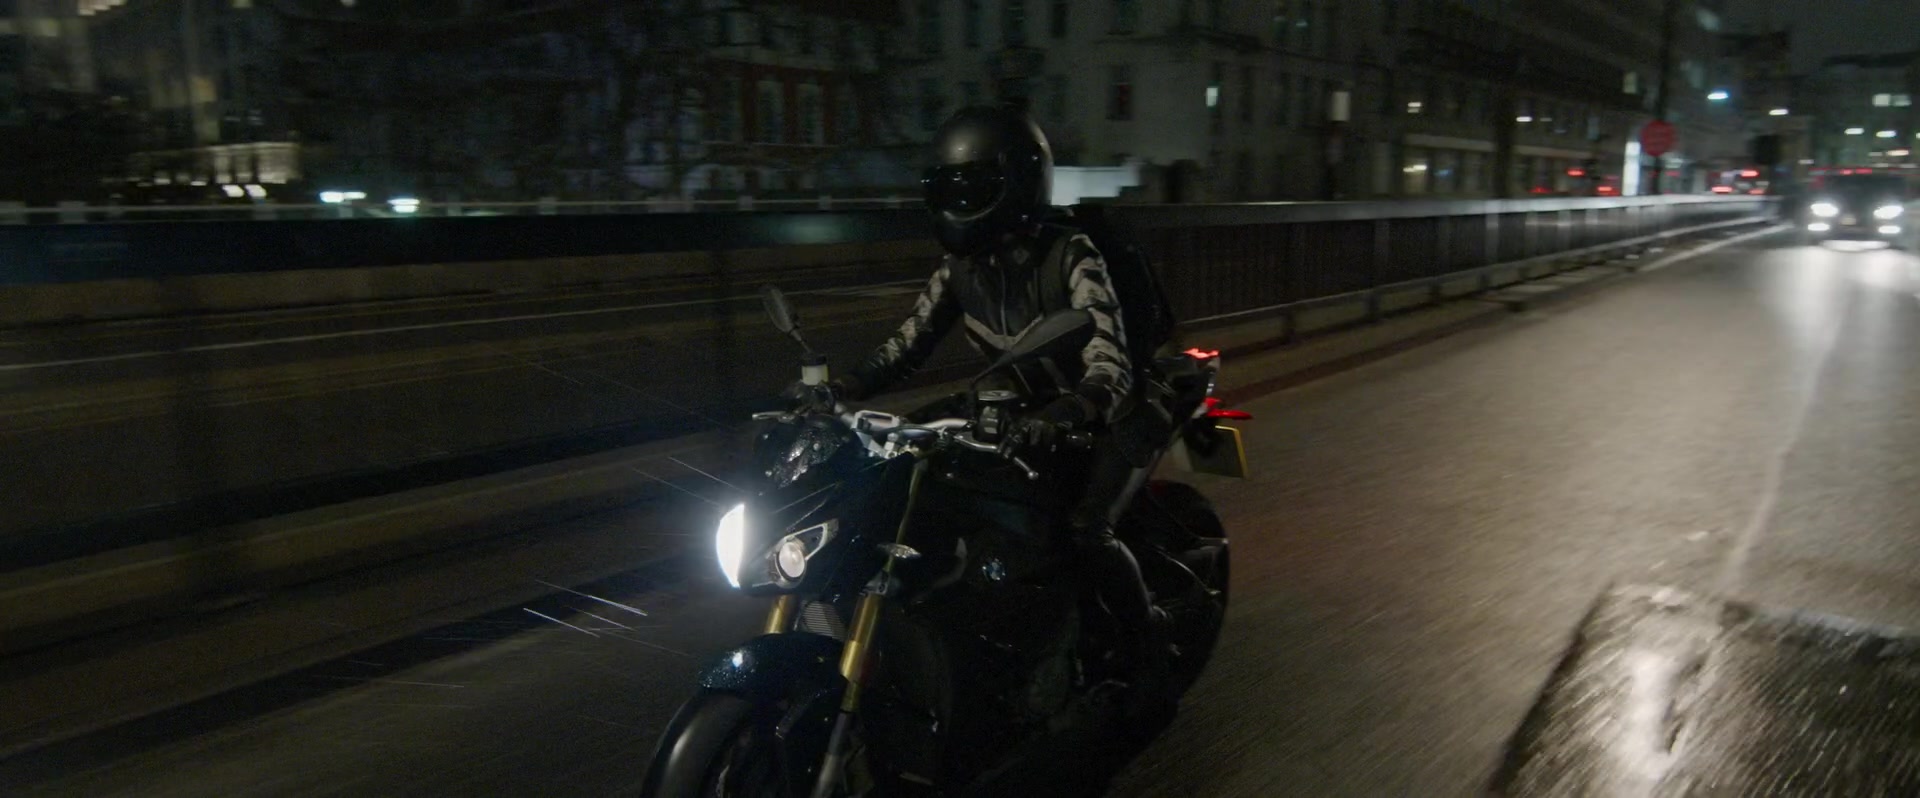 BMW Motorcycle Used By Olga Kurylenko In The Courier (2019)